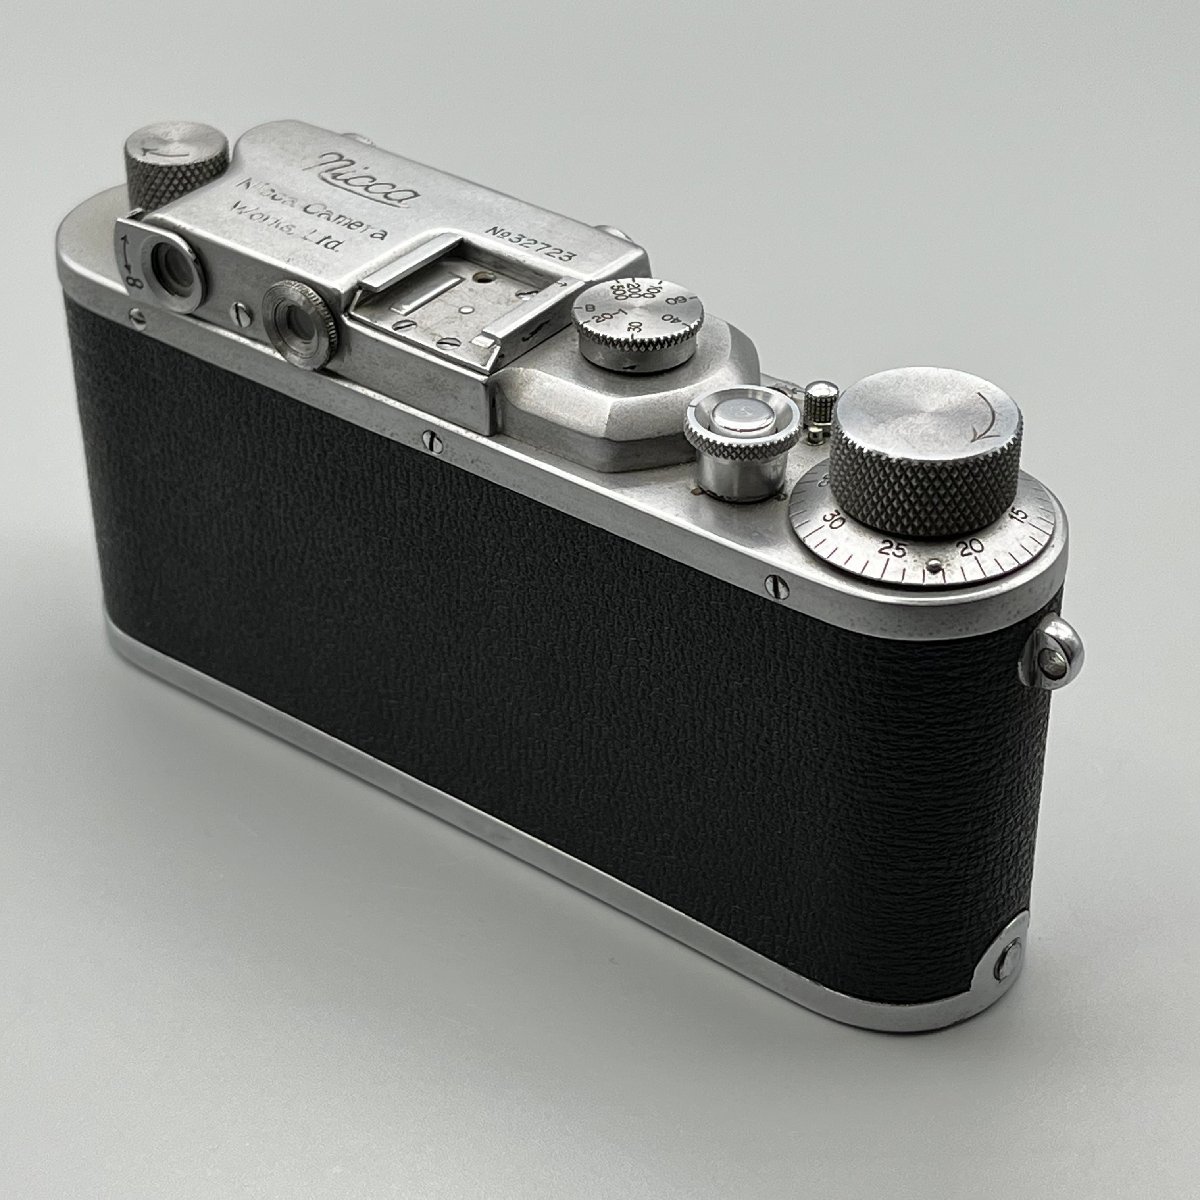 Nicca Type-3B Nicca Camera Company, Ltd. ニッカ ⅢB型 ニッカカメラ Leica ライカ Lマウント ジャンク品の画像6